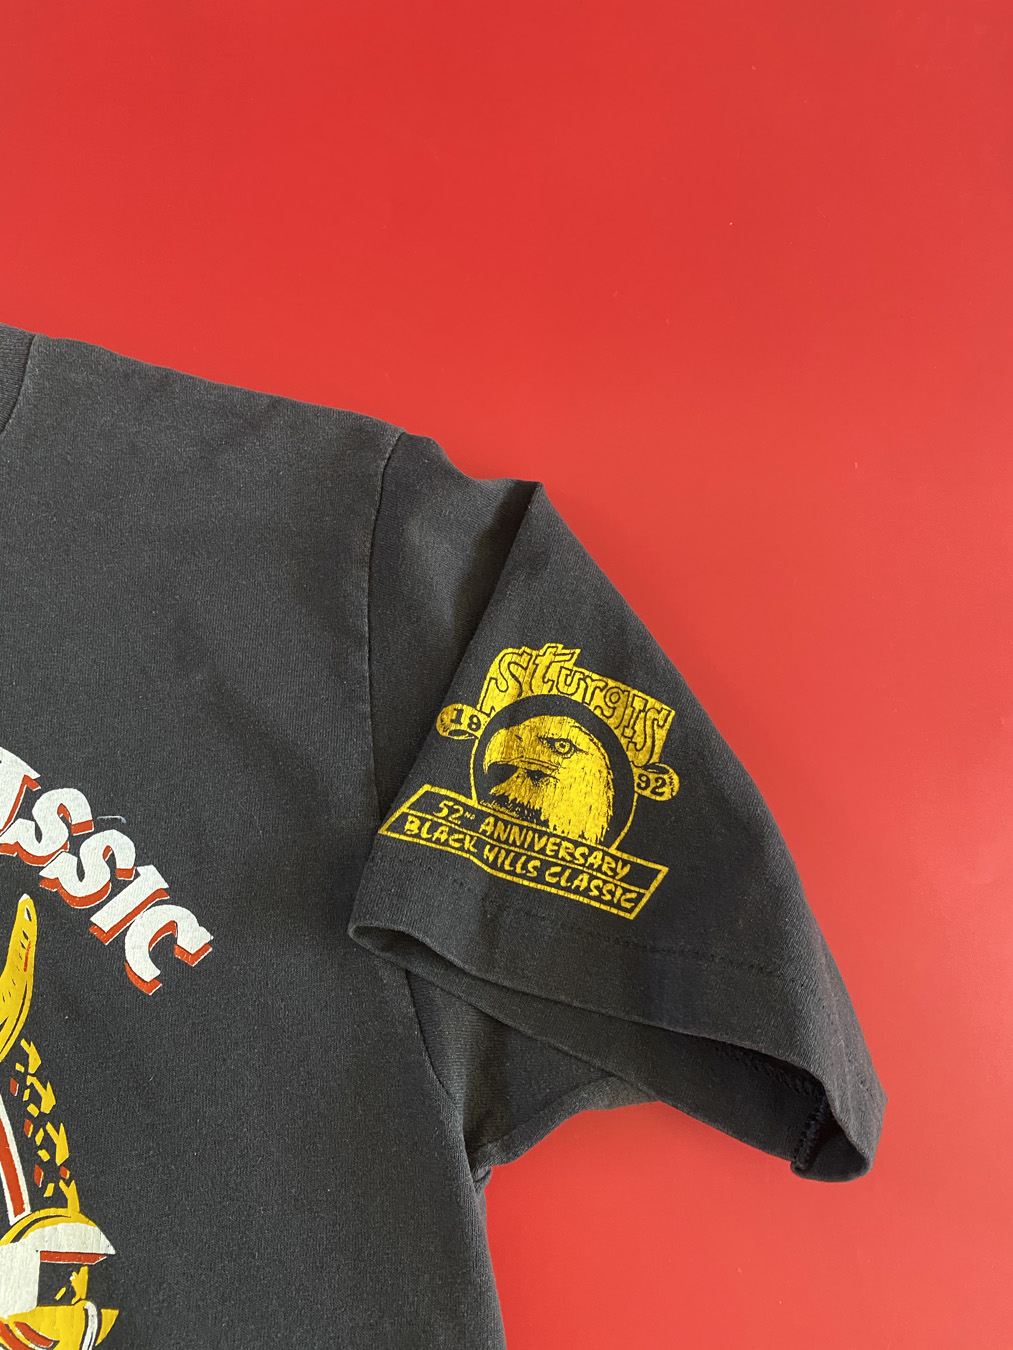 1992 Black Hills Classic Sturgis 52nd Anniversary T-Shirt - 5 Star Vintage